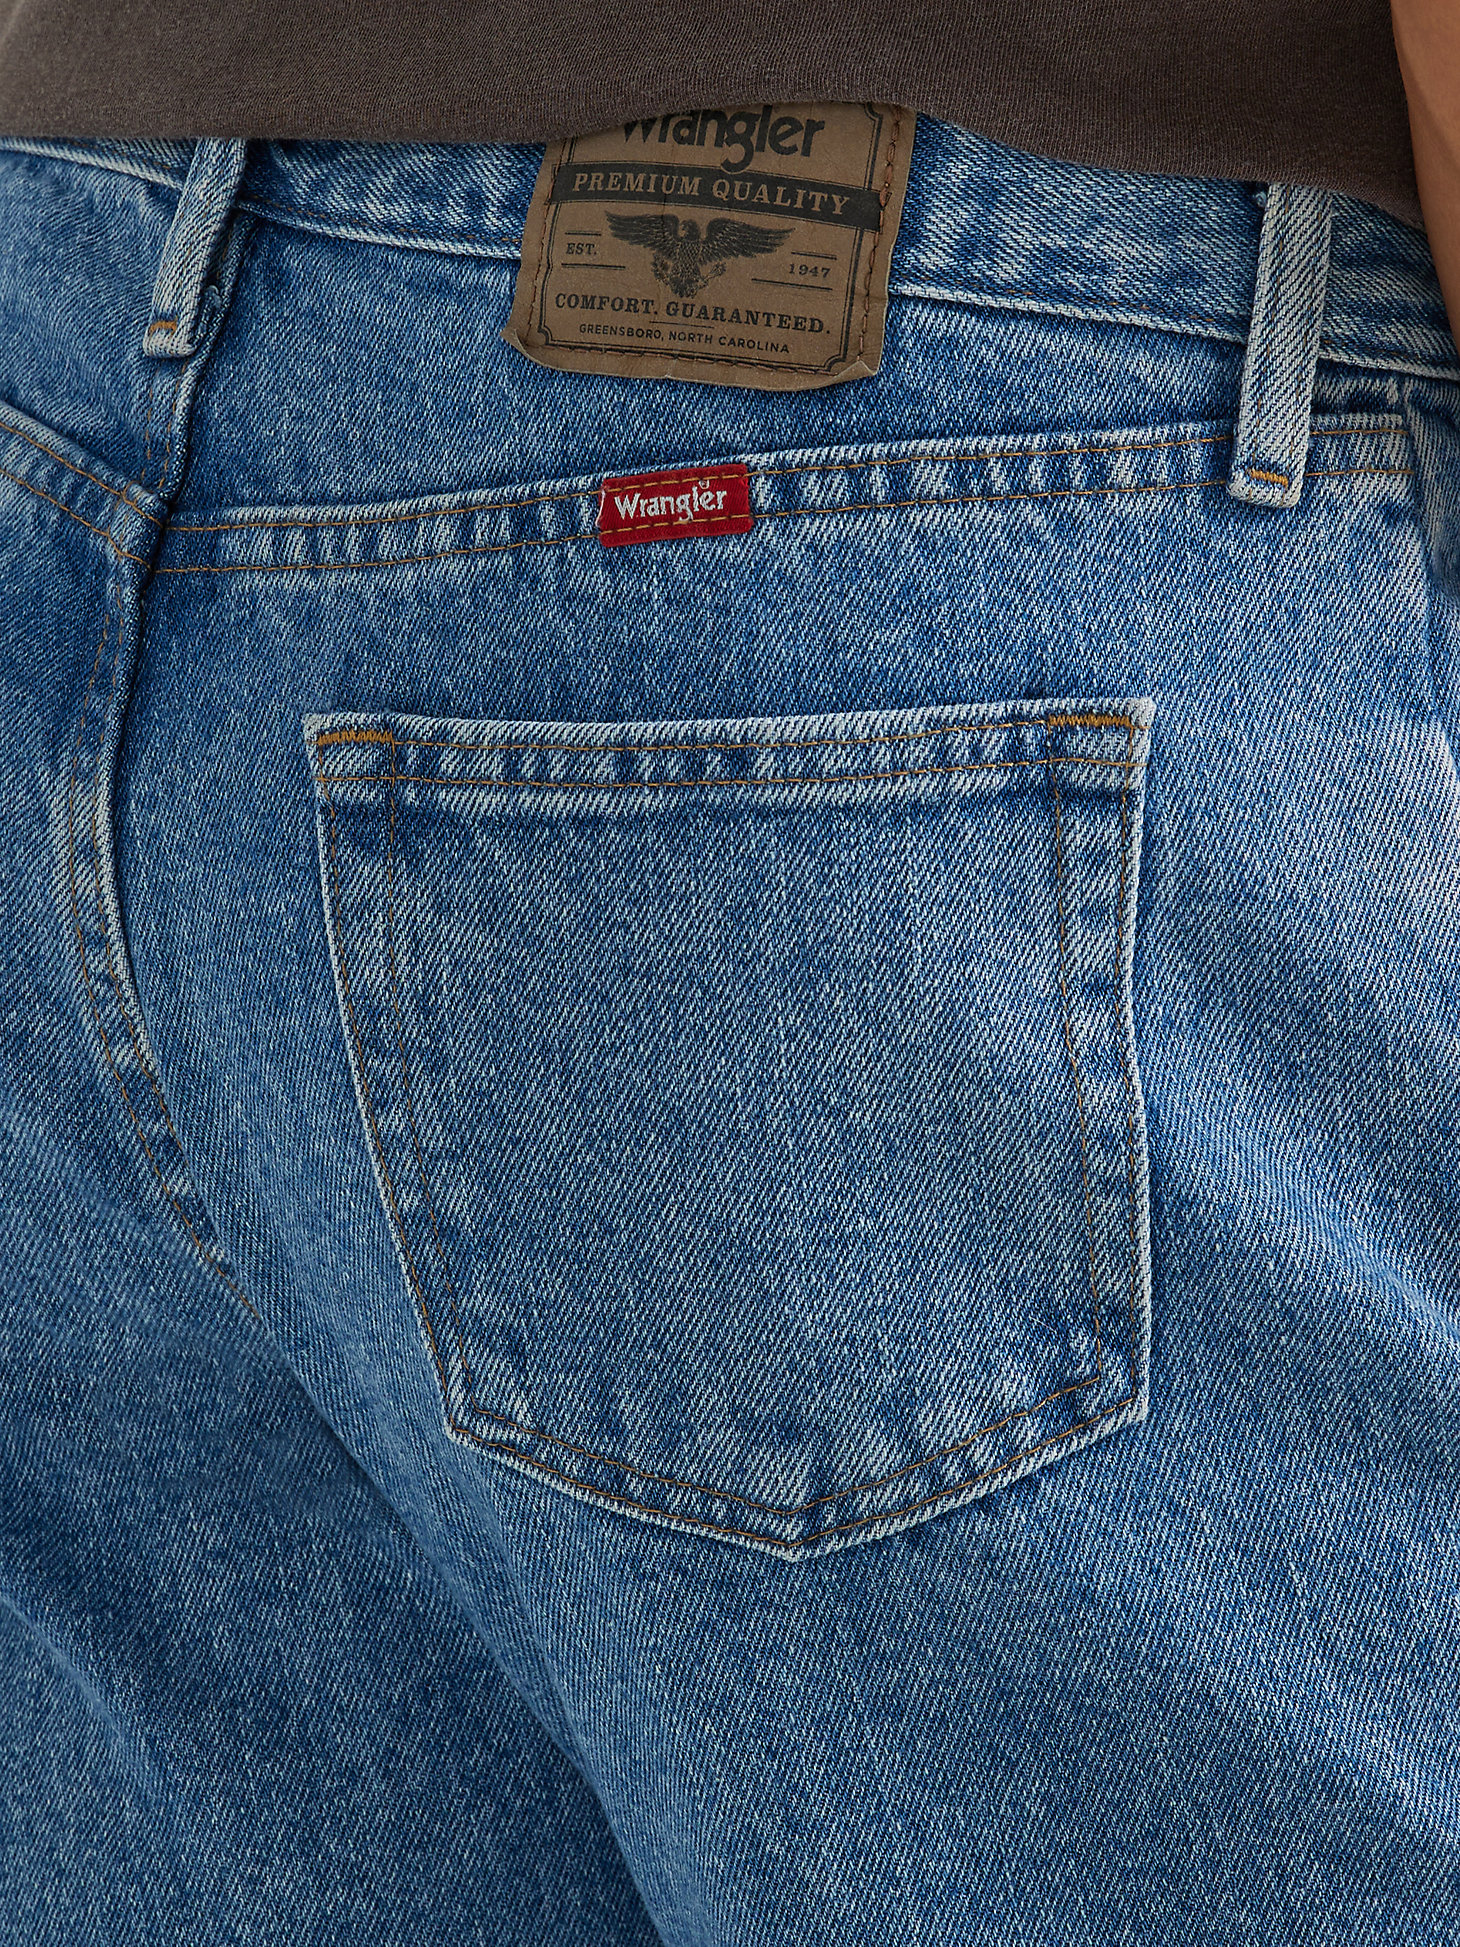 Wrangler® Five Star Premium Denim Relaxed Fit Jean in Stone Bleach alternative view 2